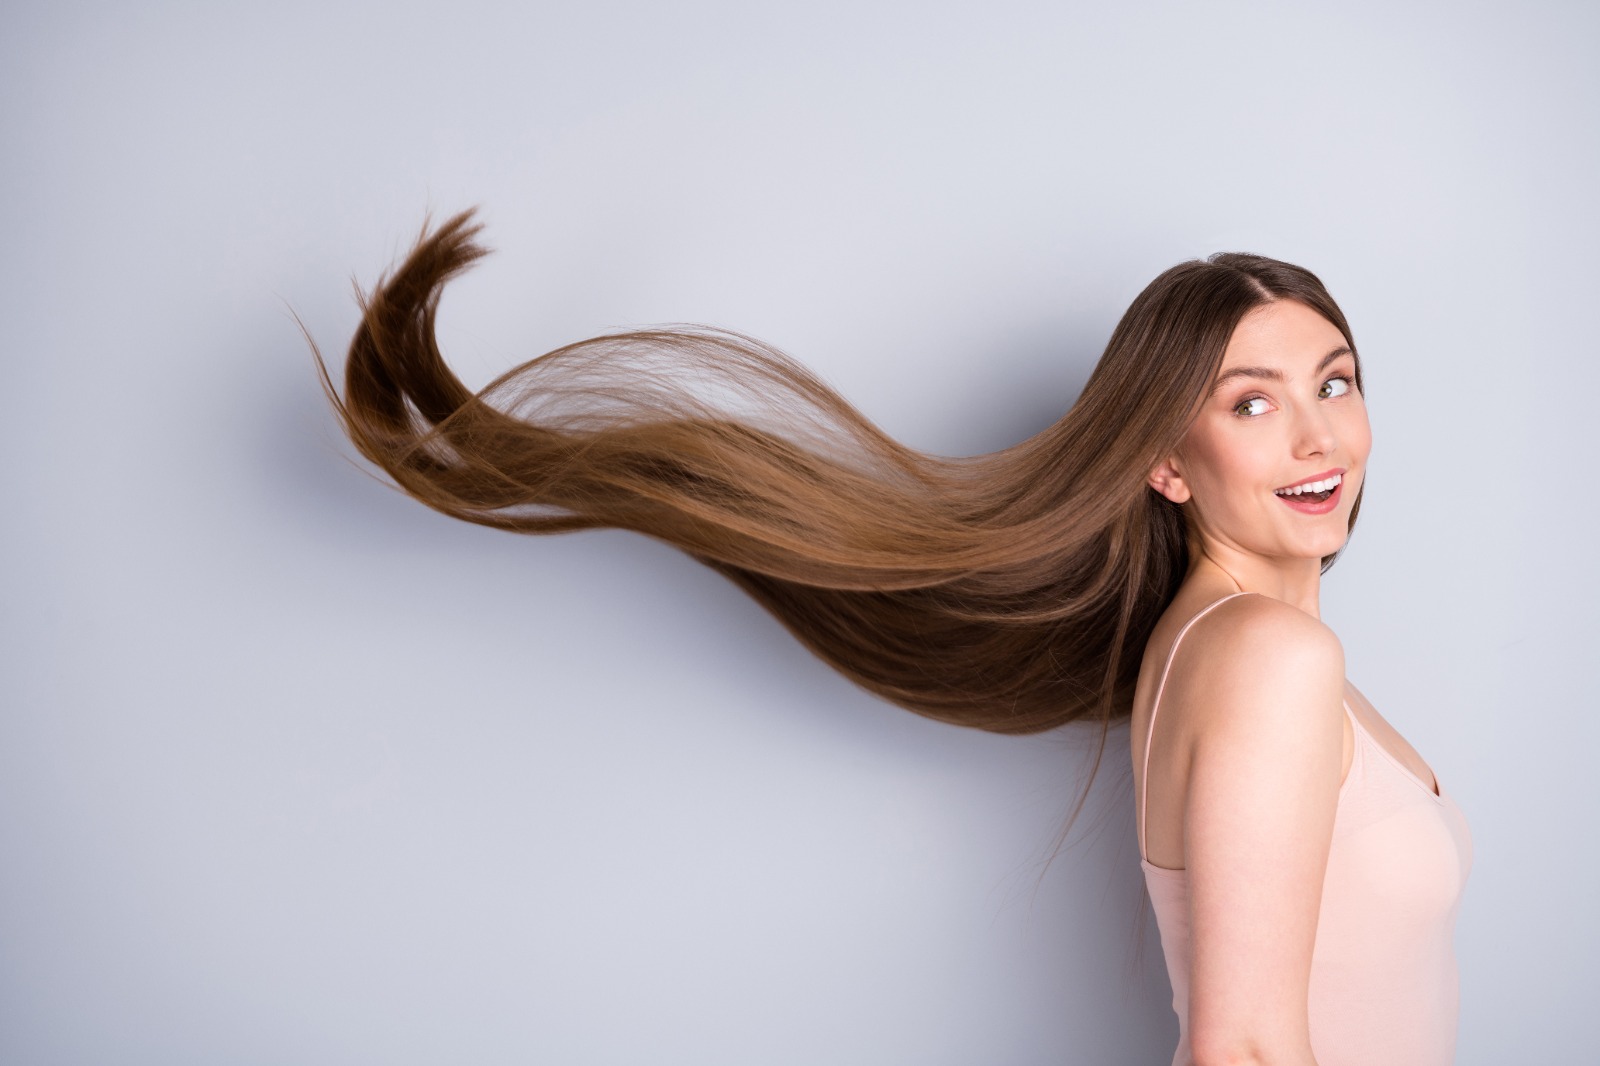 Can hemp oil regrow hair?